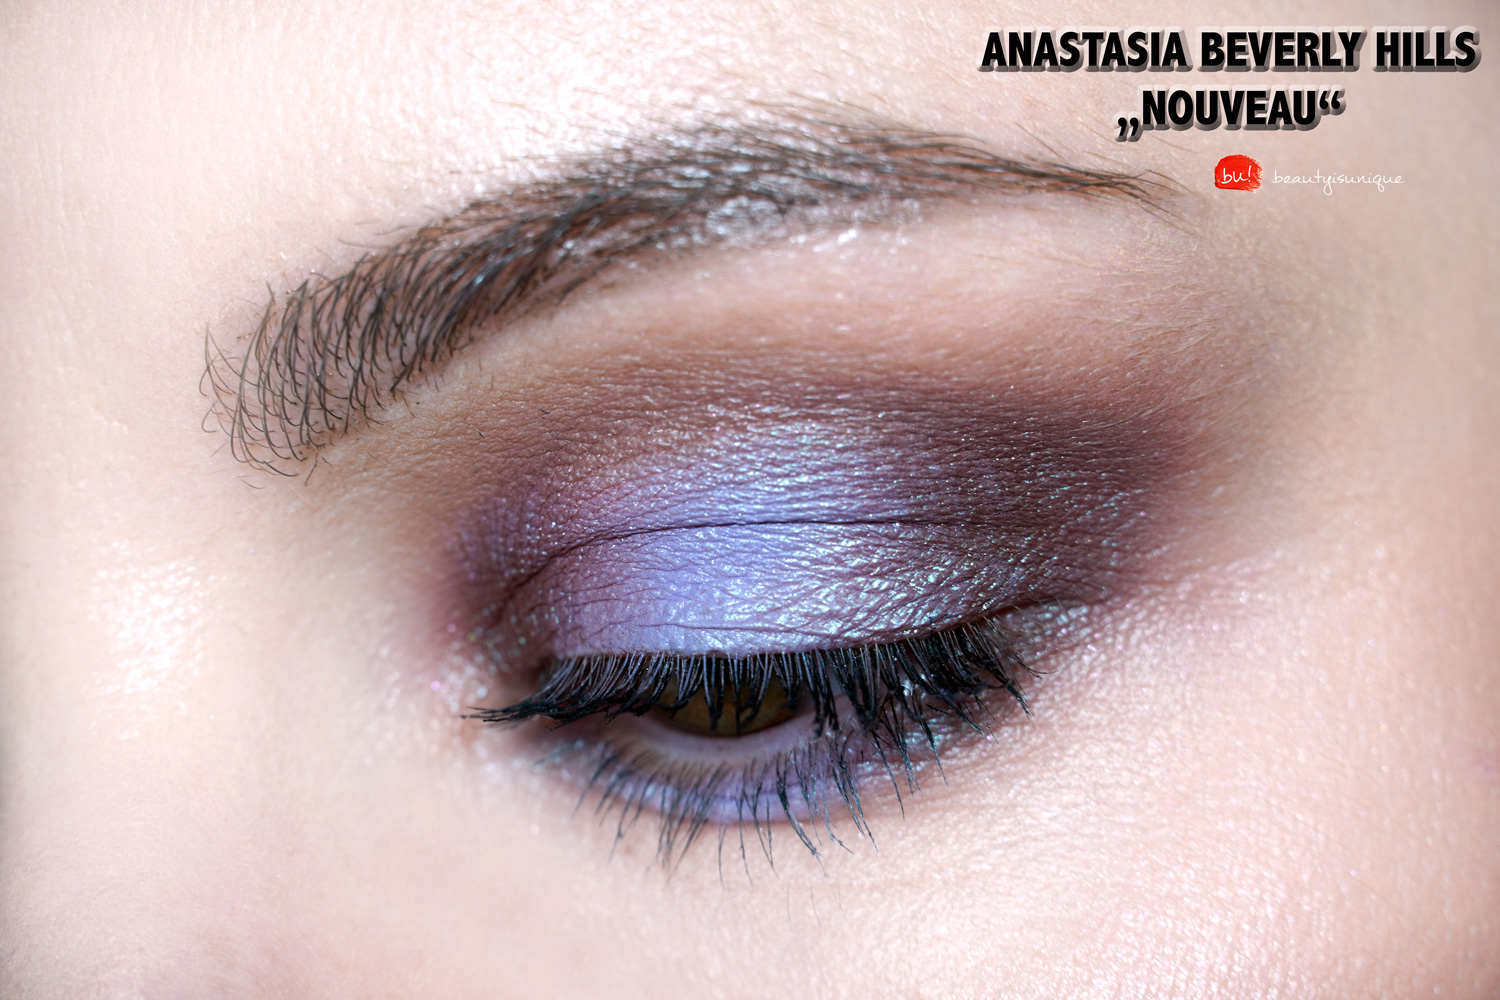 Anastasia-beverly-hills-nouveau-palette